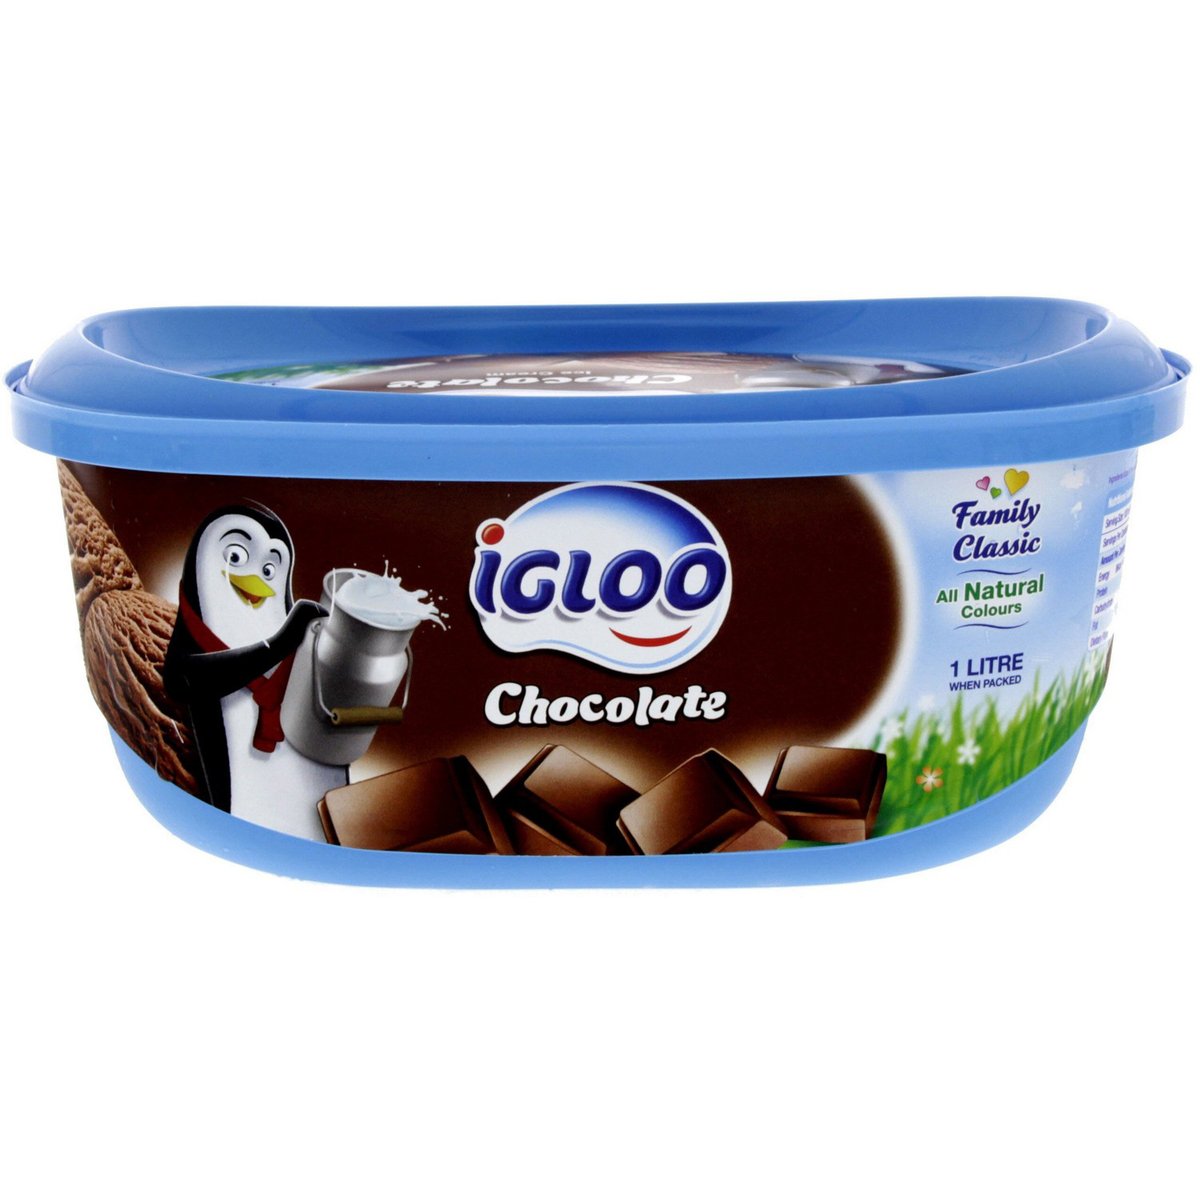 Buy Igloo Chocolate Ice Cream 1 Litre Online at Best Price | Ice Cream Take Home | Lulu Kuwait in Kuwait